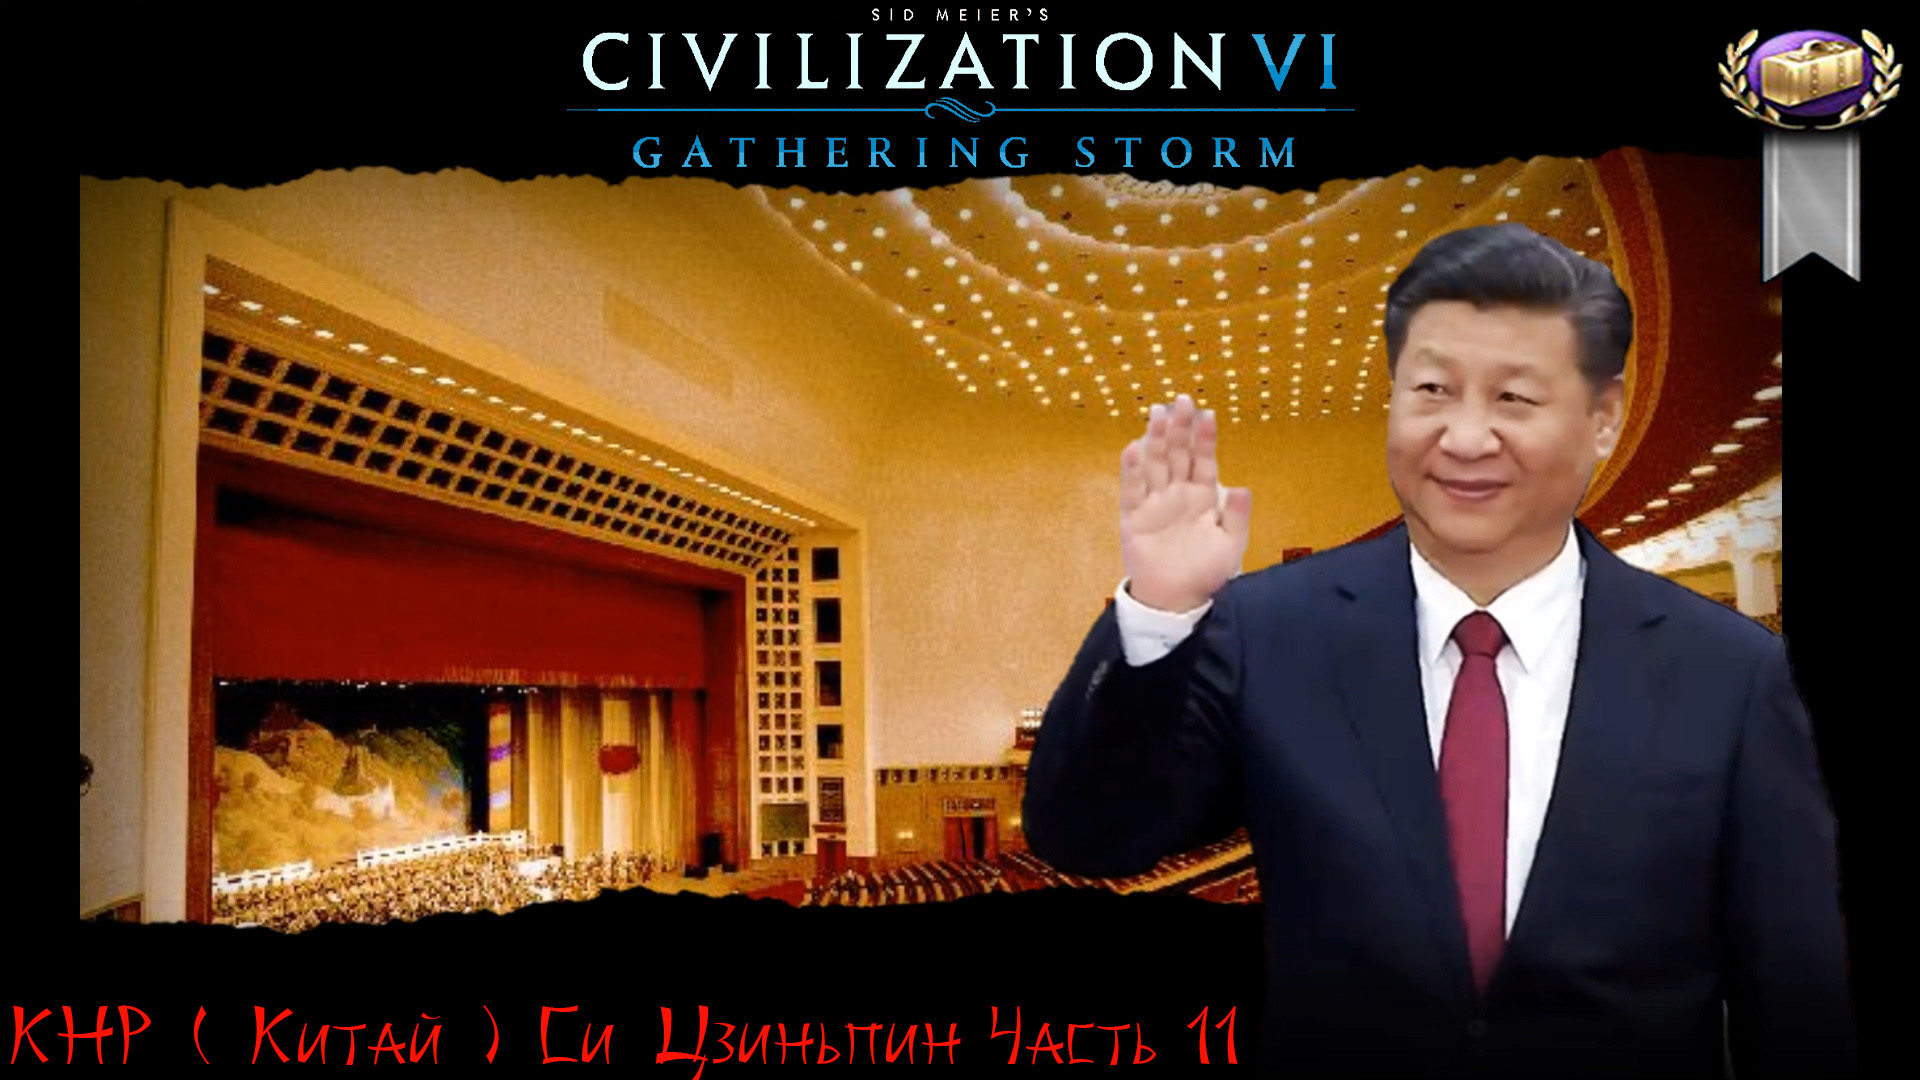 Sid Meier's Civilization VI КНР ( Китай ) Си Цзиньпин Часть 11